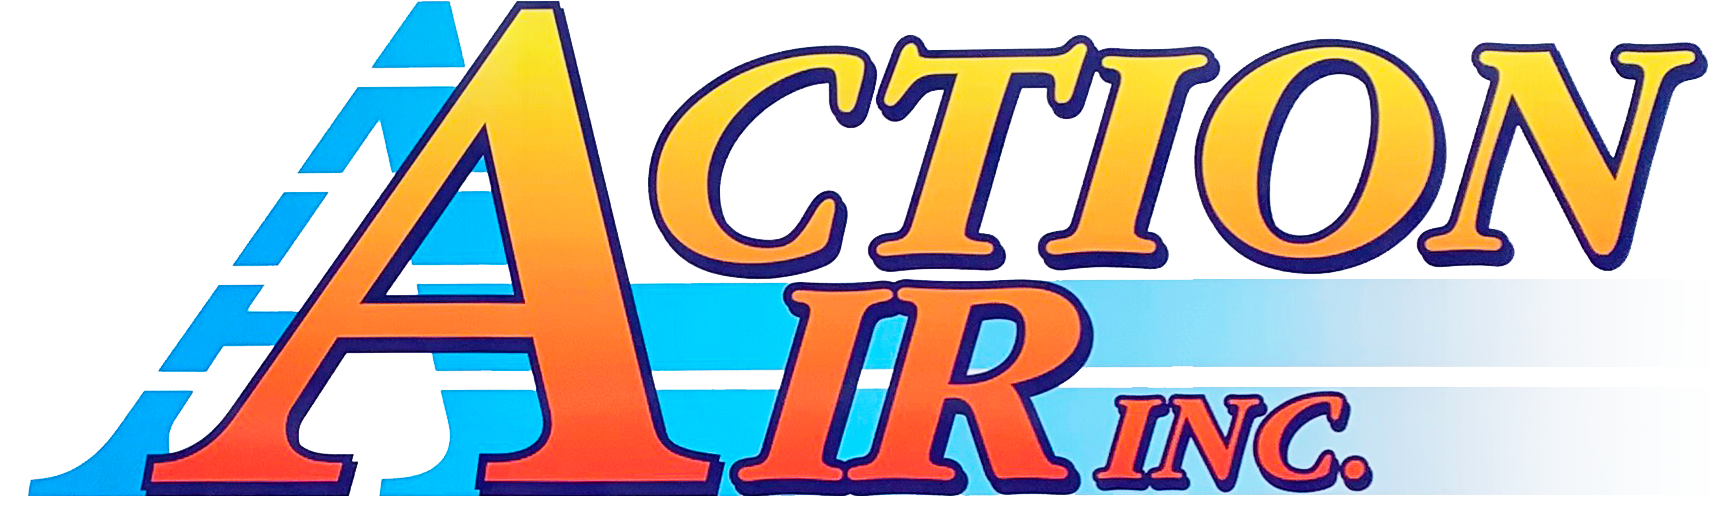 Action Air logo